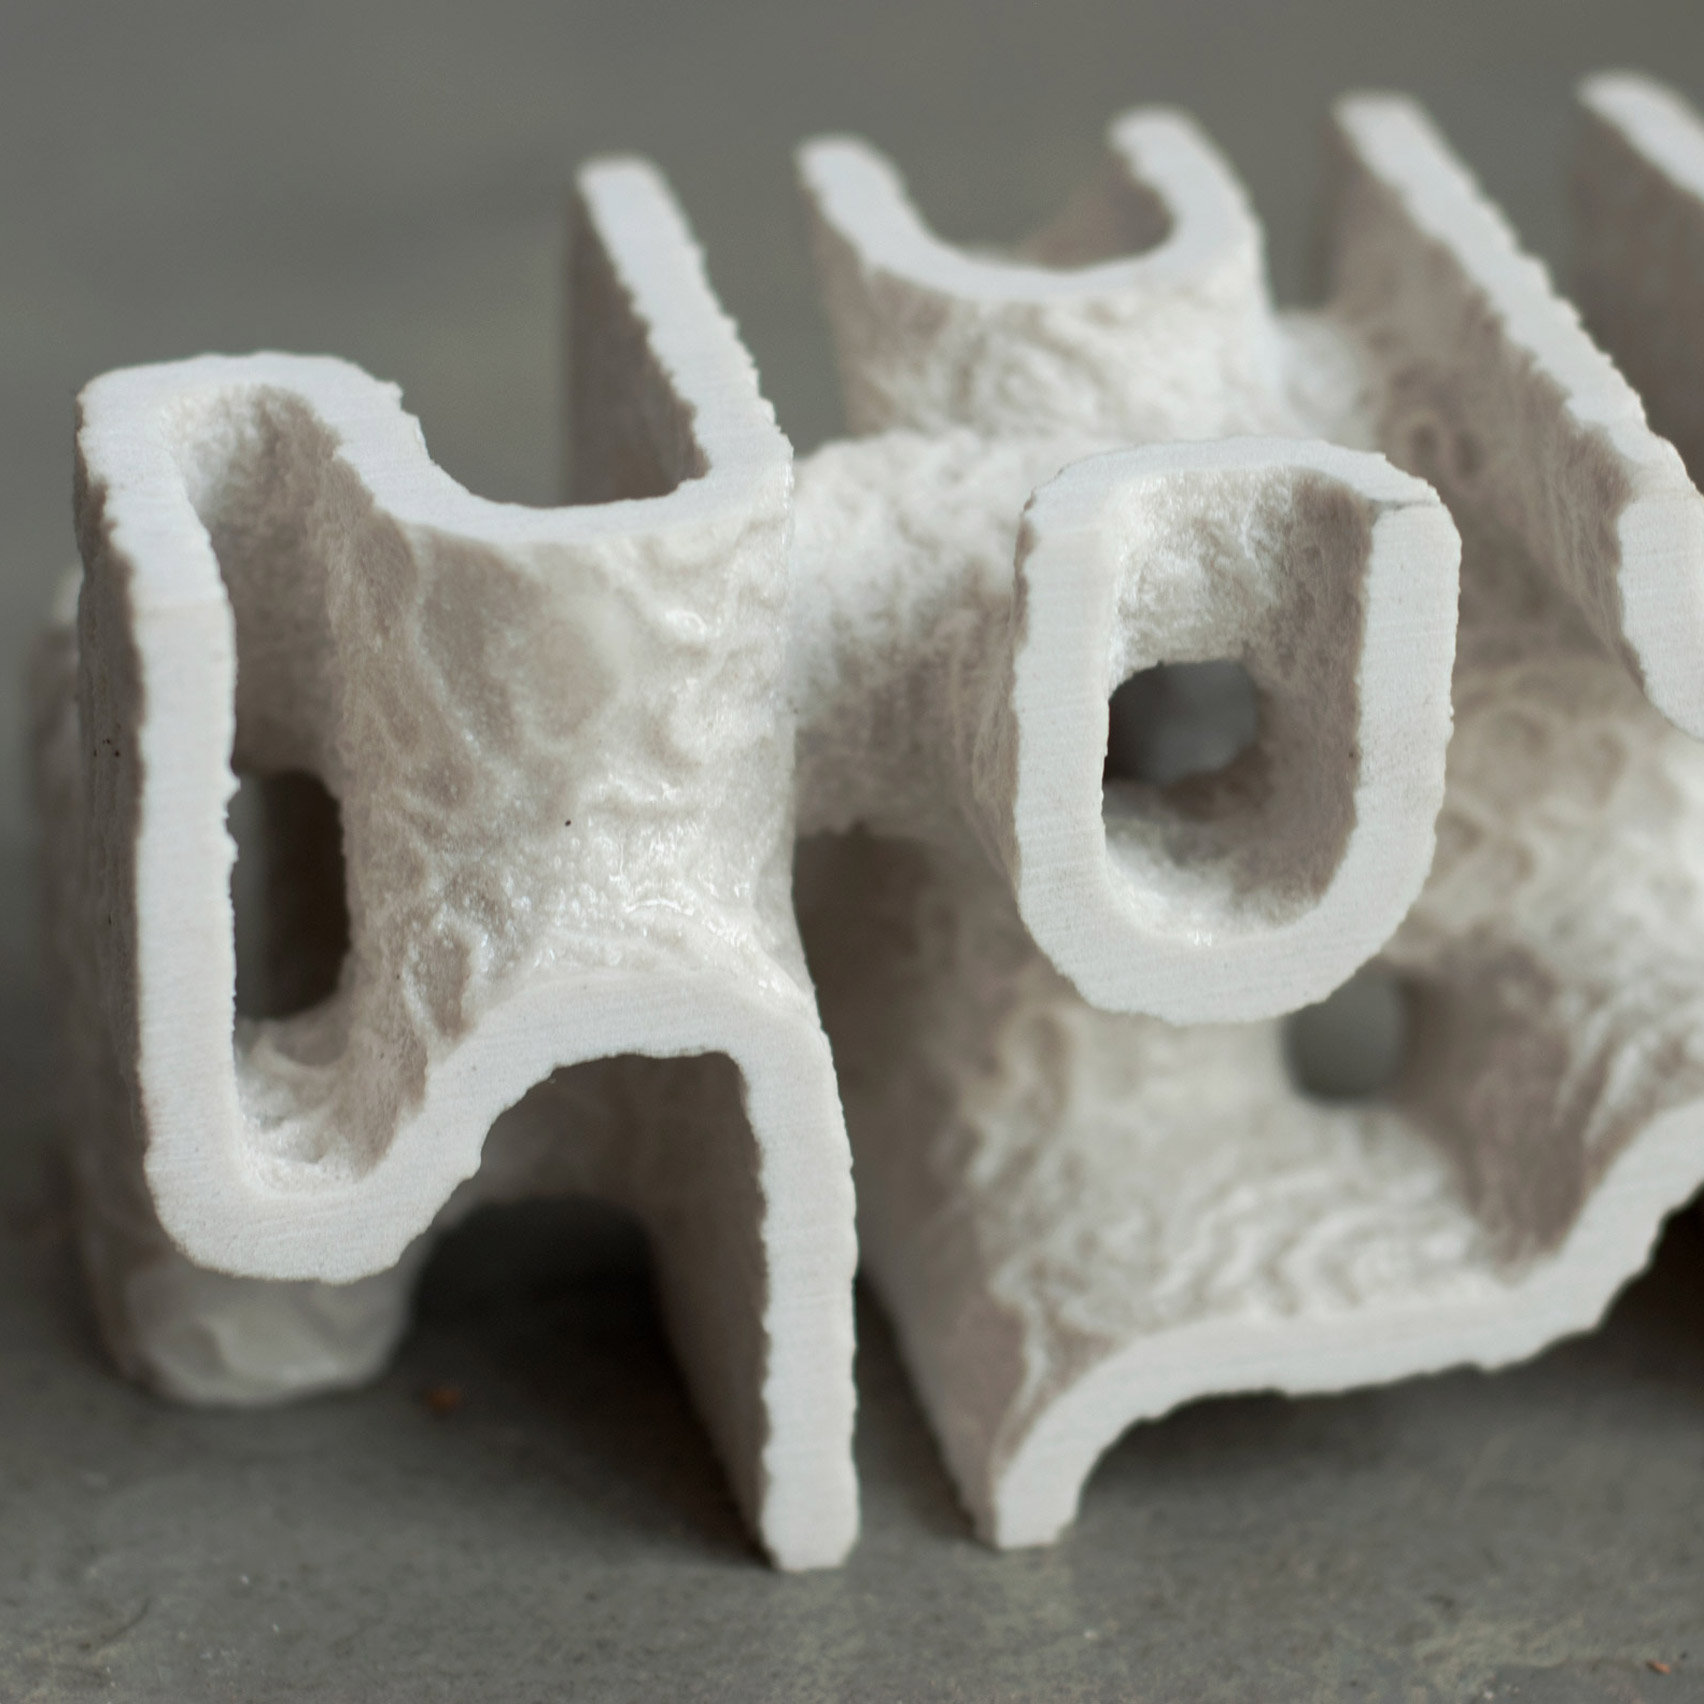 Coral reef skeletons crafted 3D-printed calcium